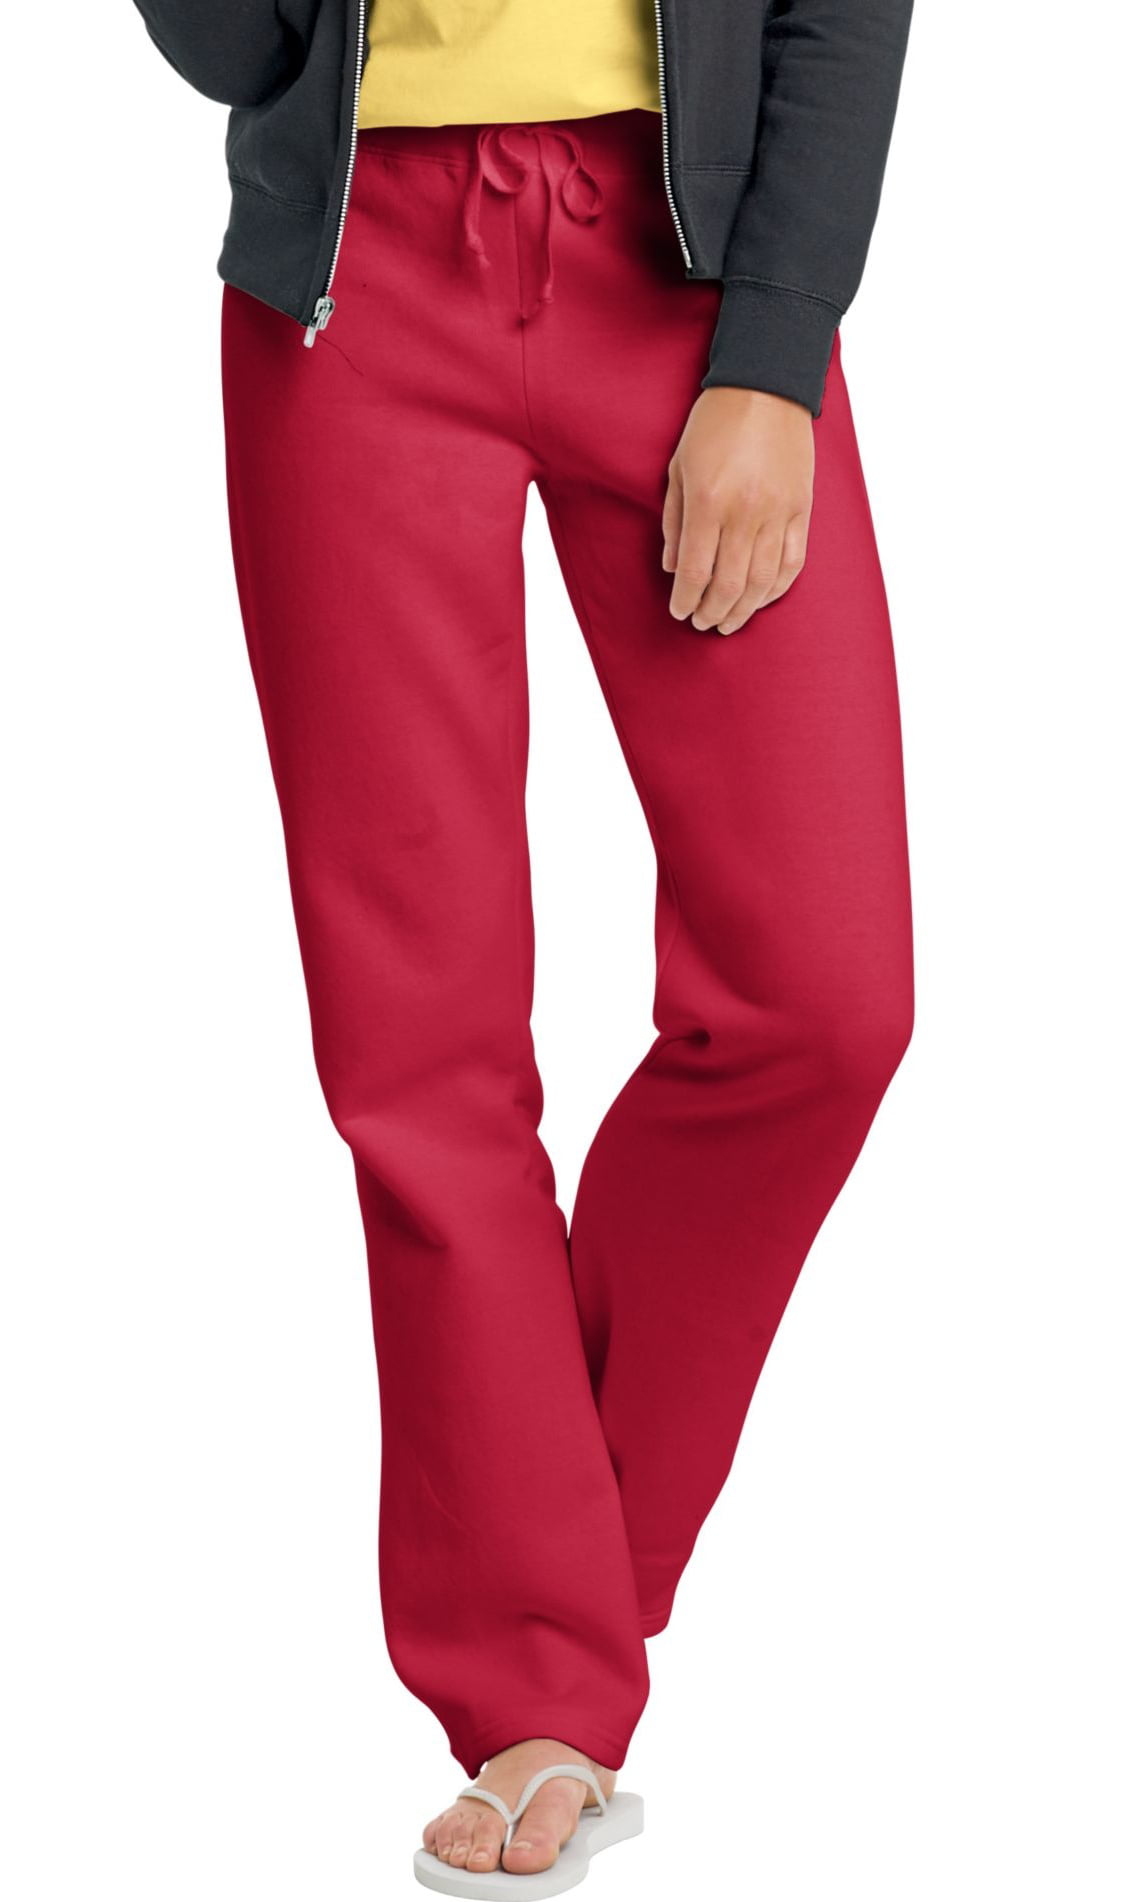 Hanes Women's Drawstring Sweatpants Size Small, Deep Red - Walmart.com